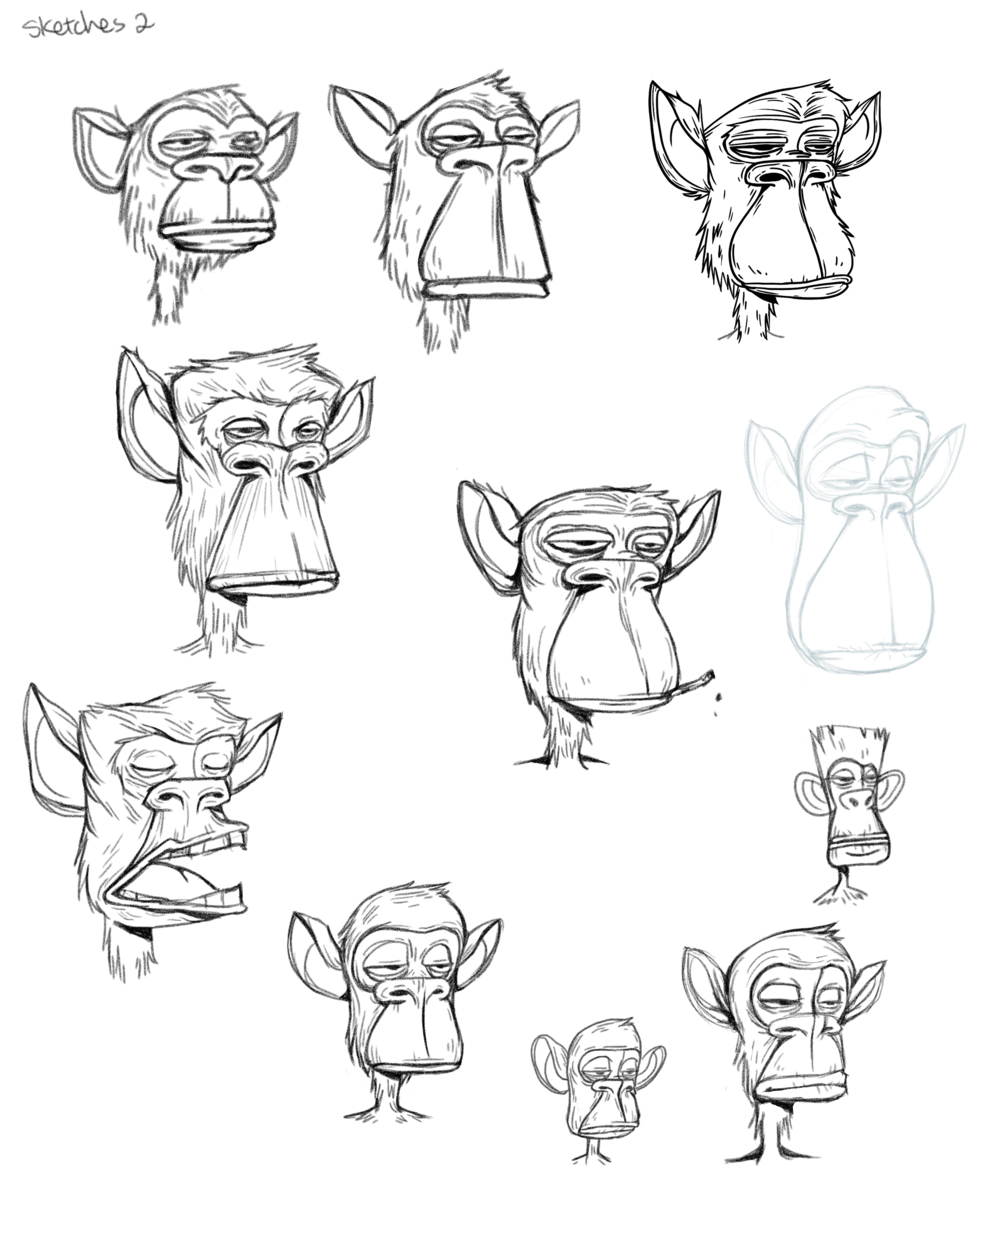 seneca bayc bored ape sketches